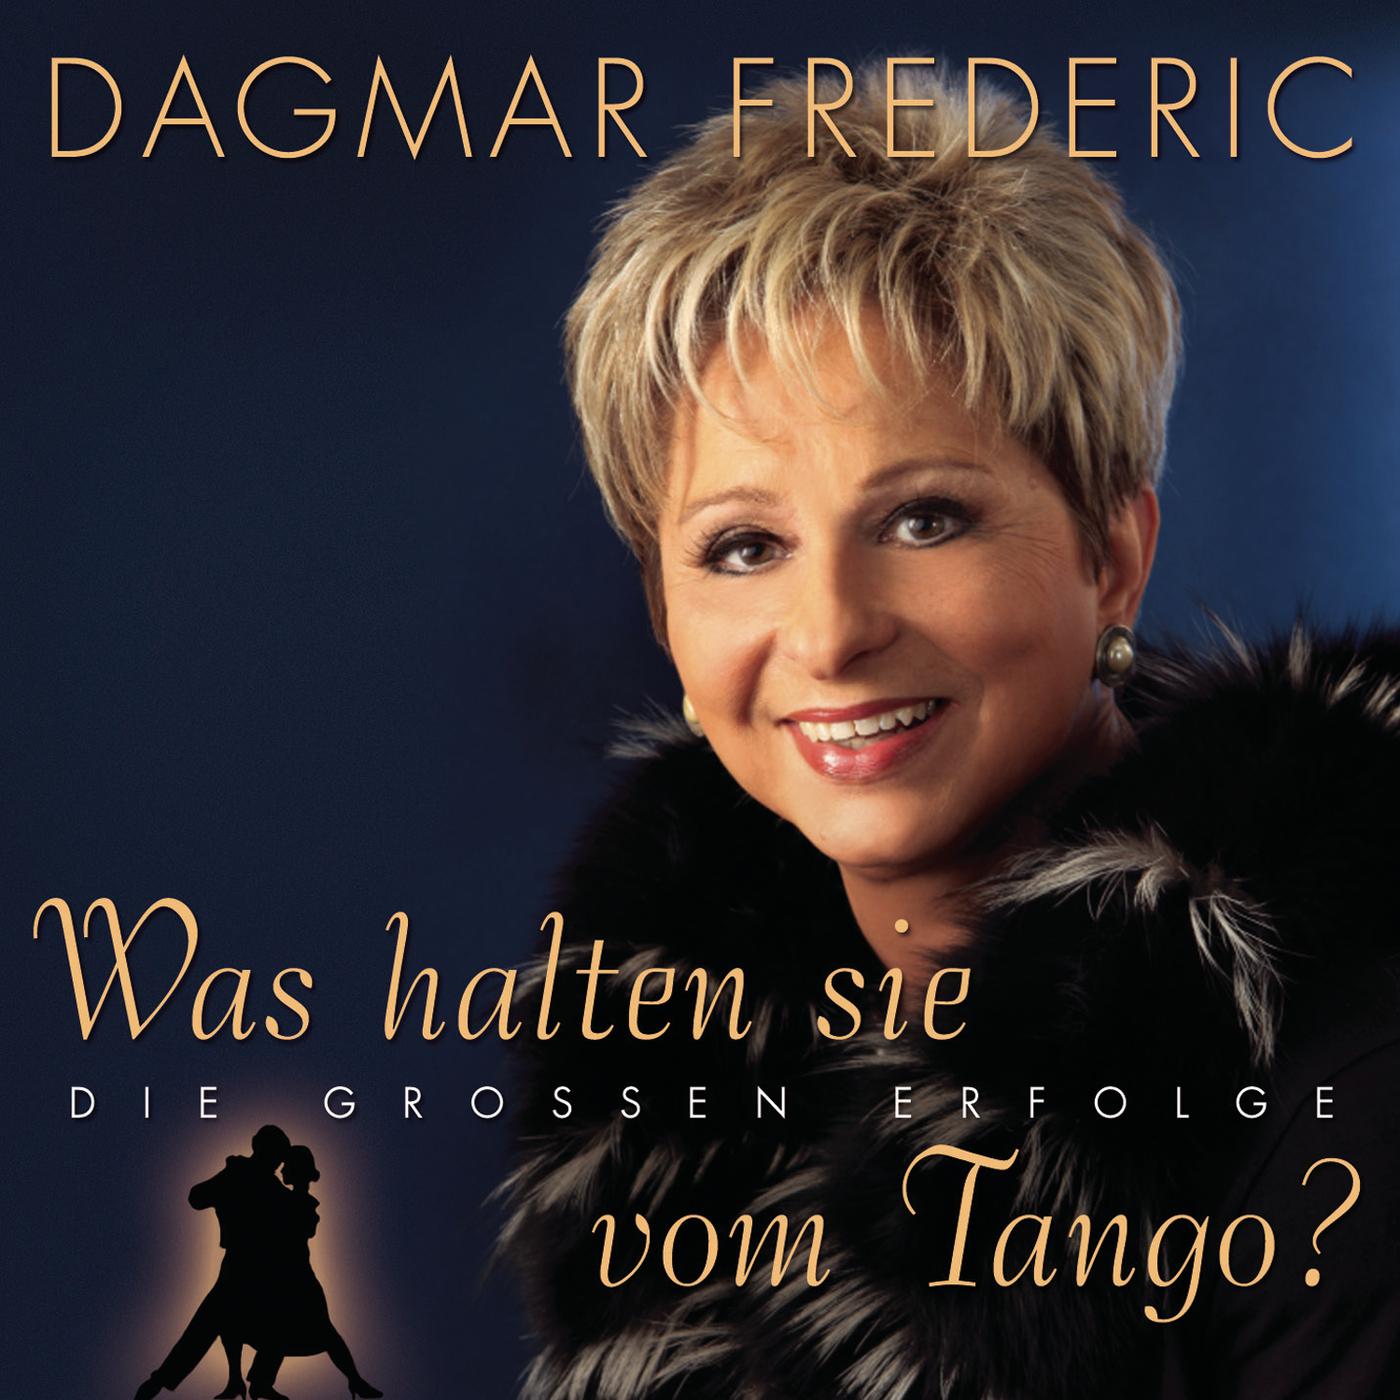 Dagmar Frederic - Jeder Tag ist ein neuer Anfang